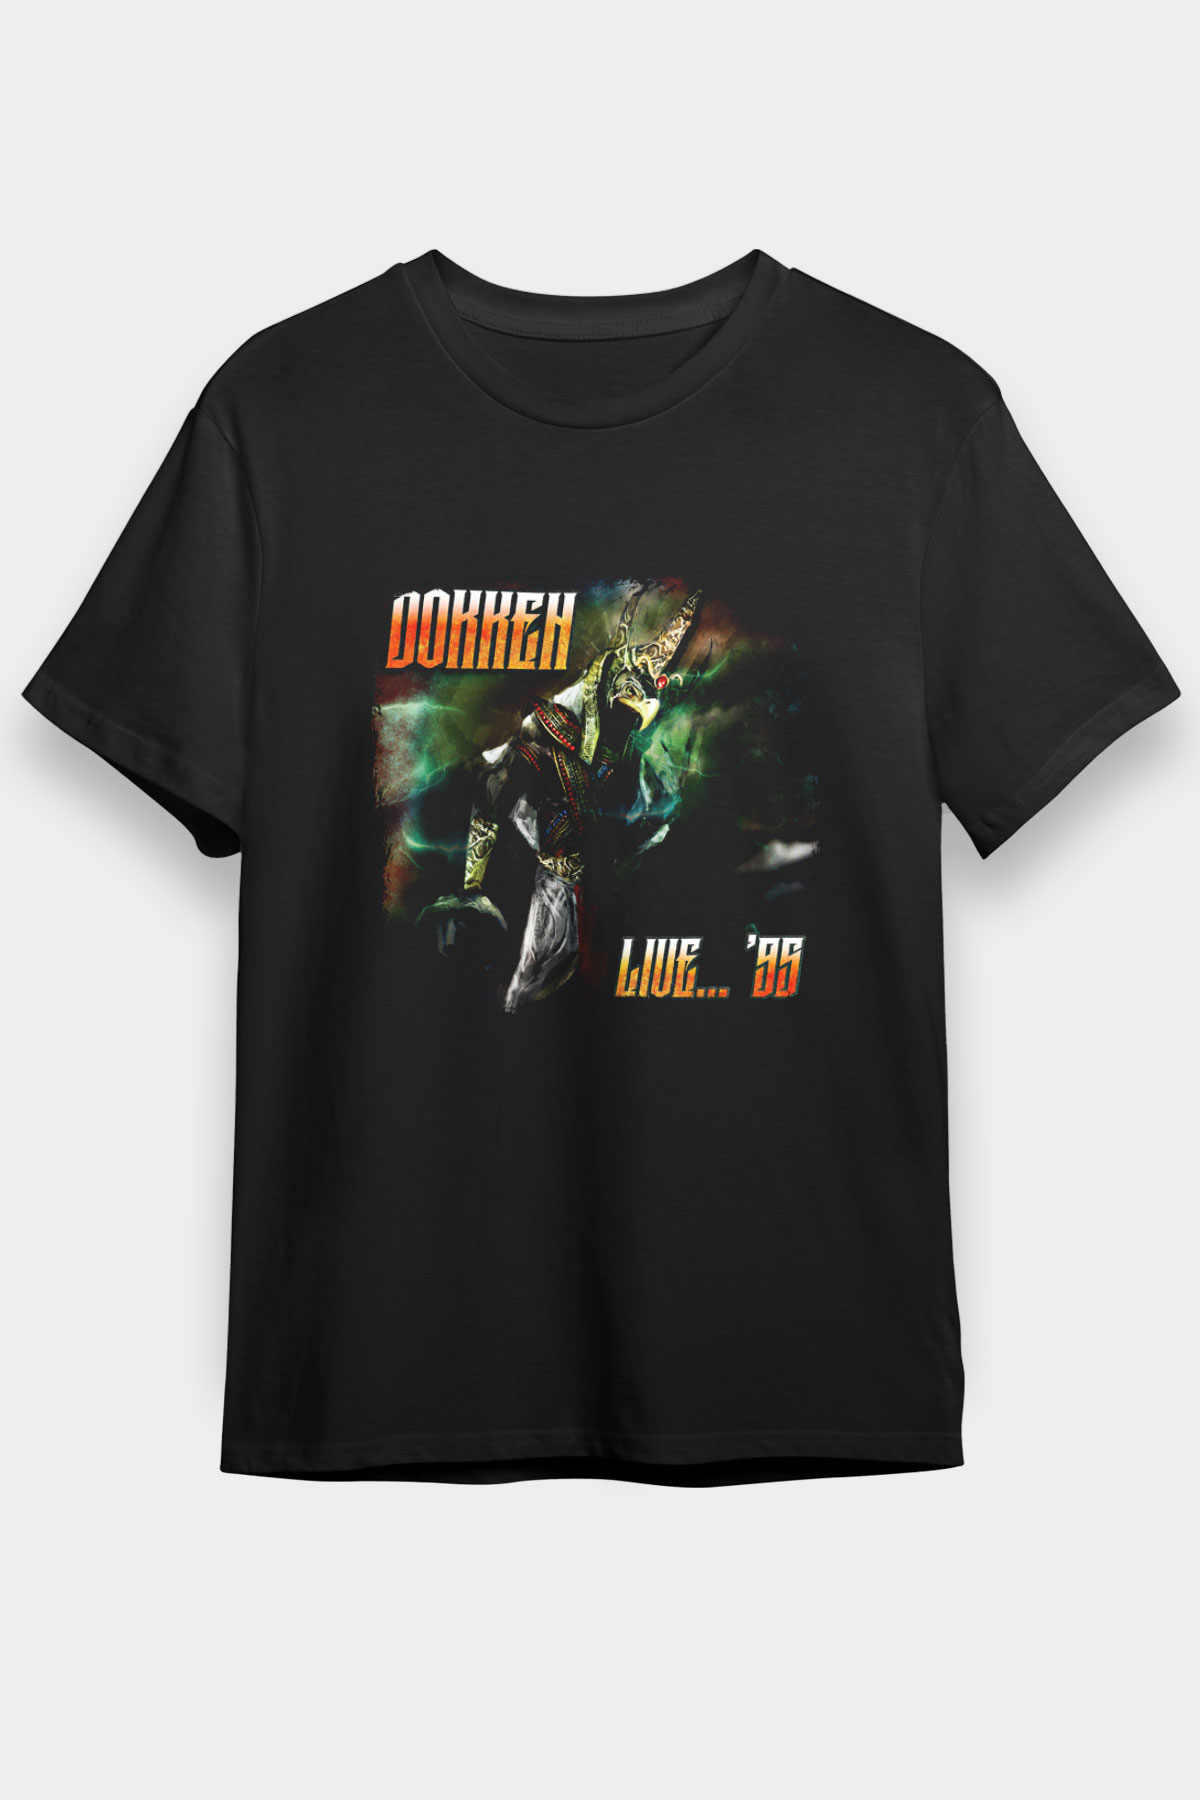 Dokken  T shirt,Music Band,Unisex Tshirt 14/